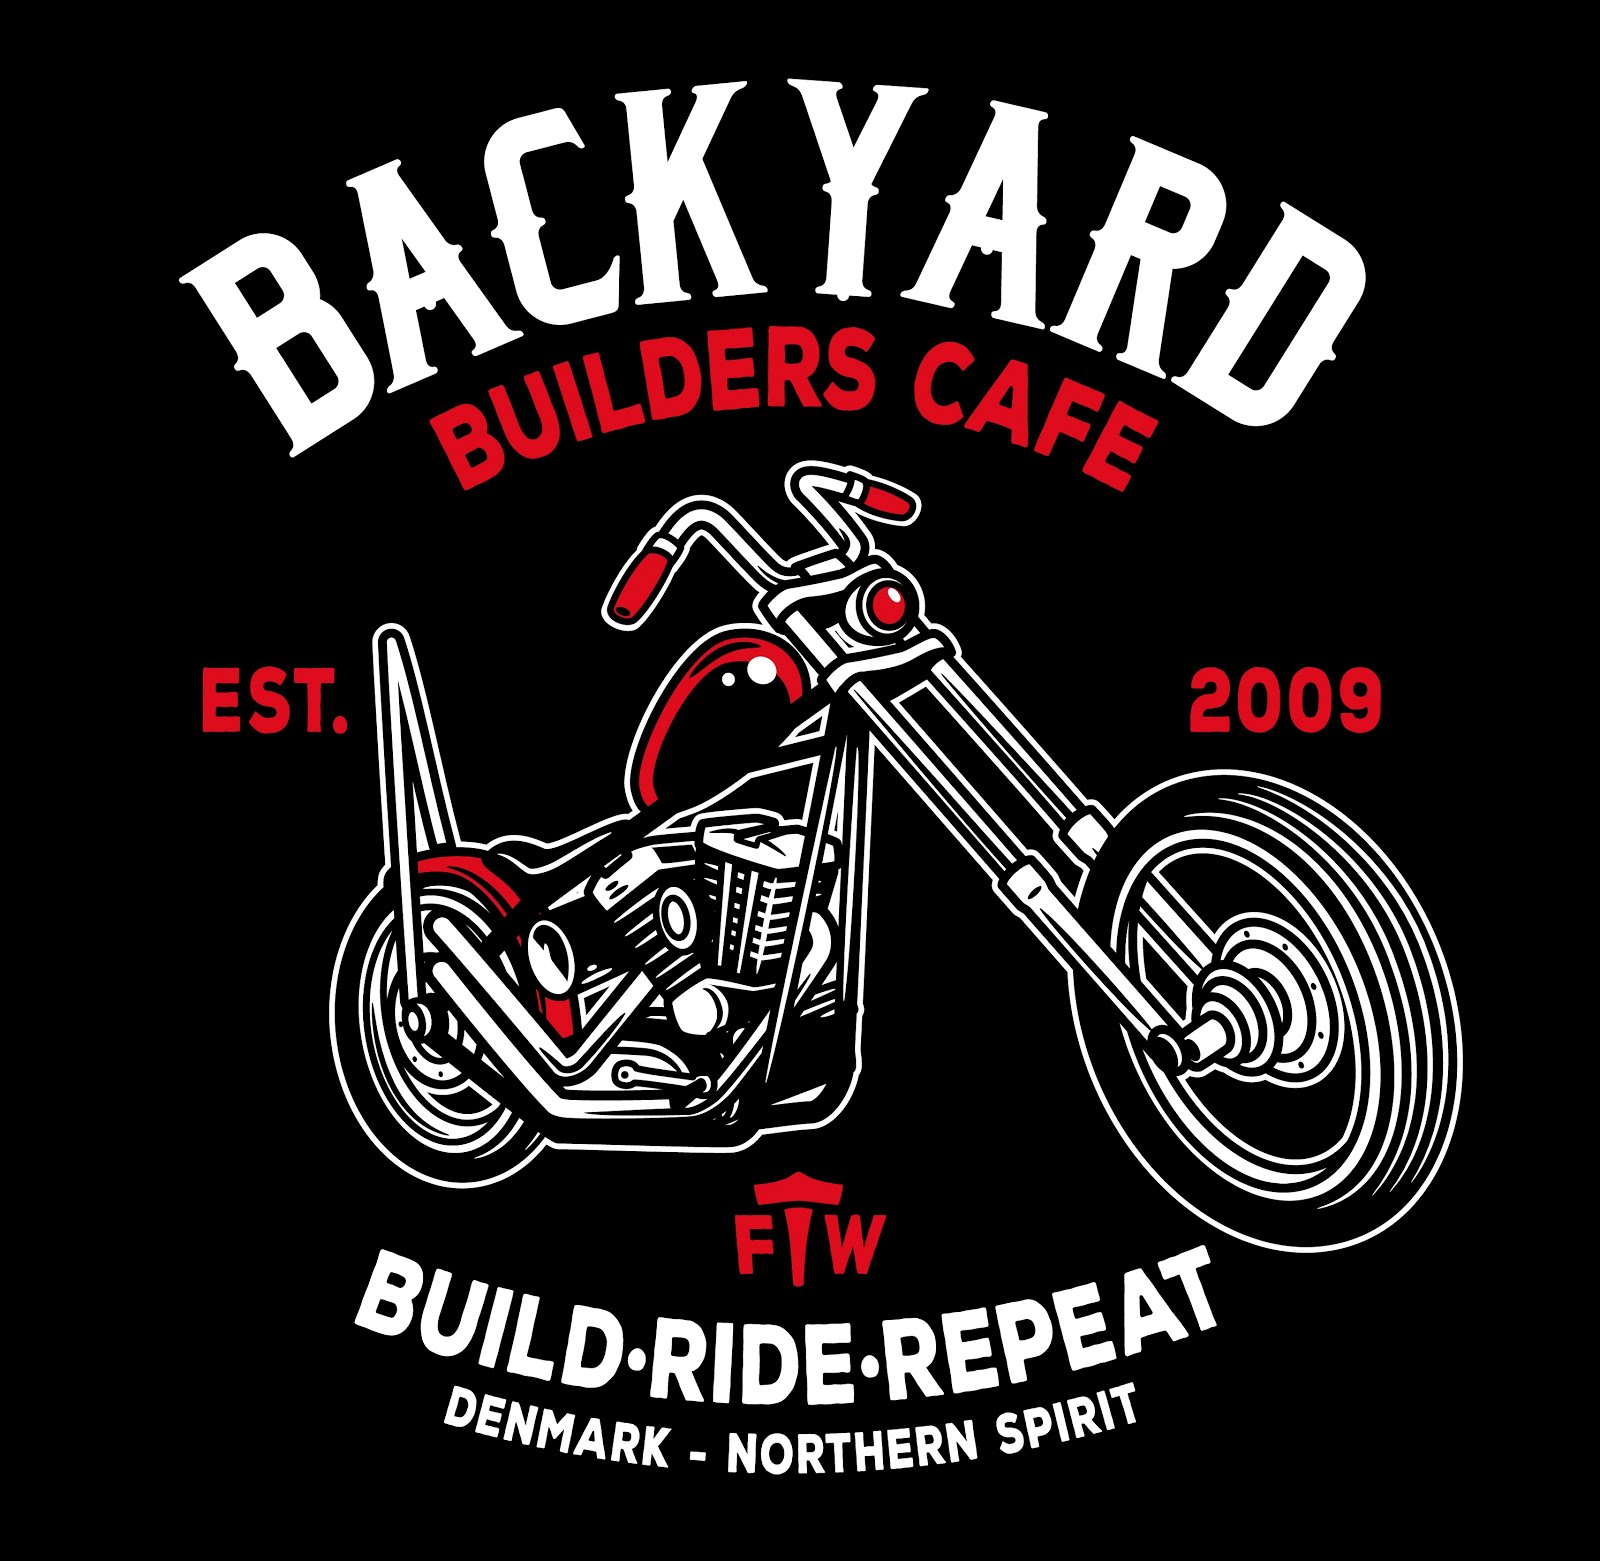 Backyard Builders Cafe...